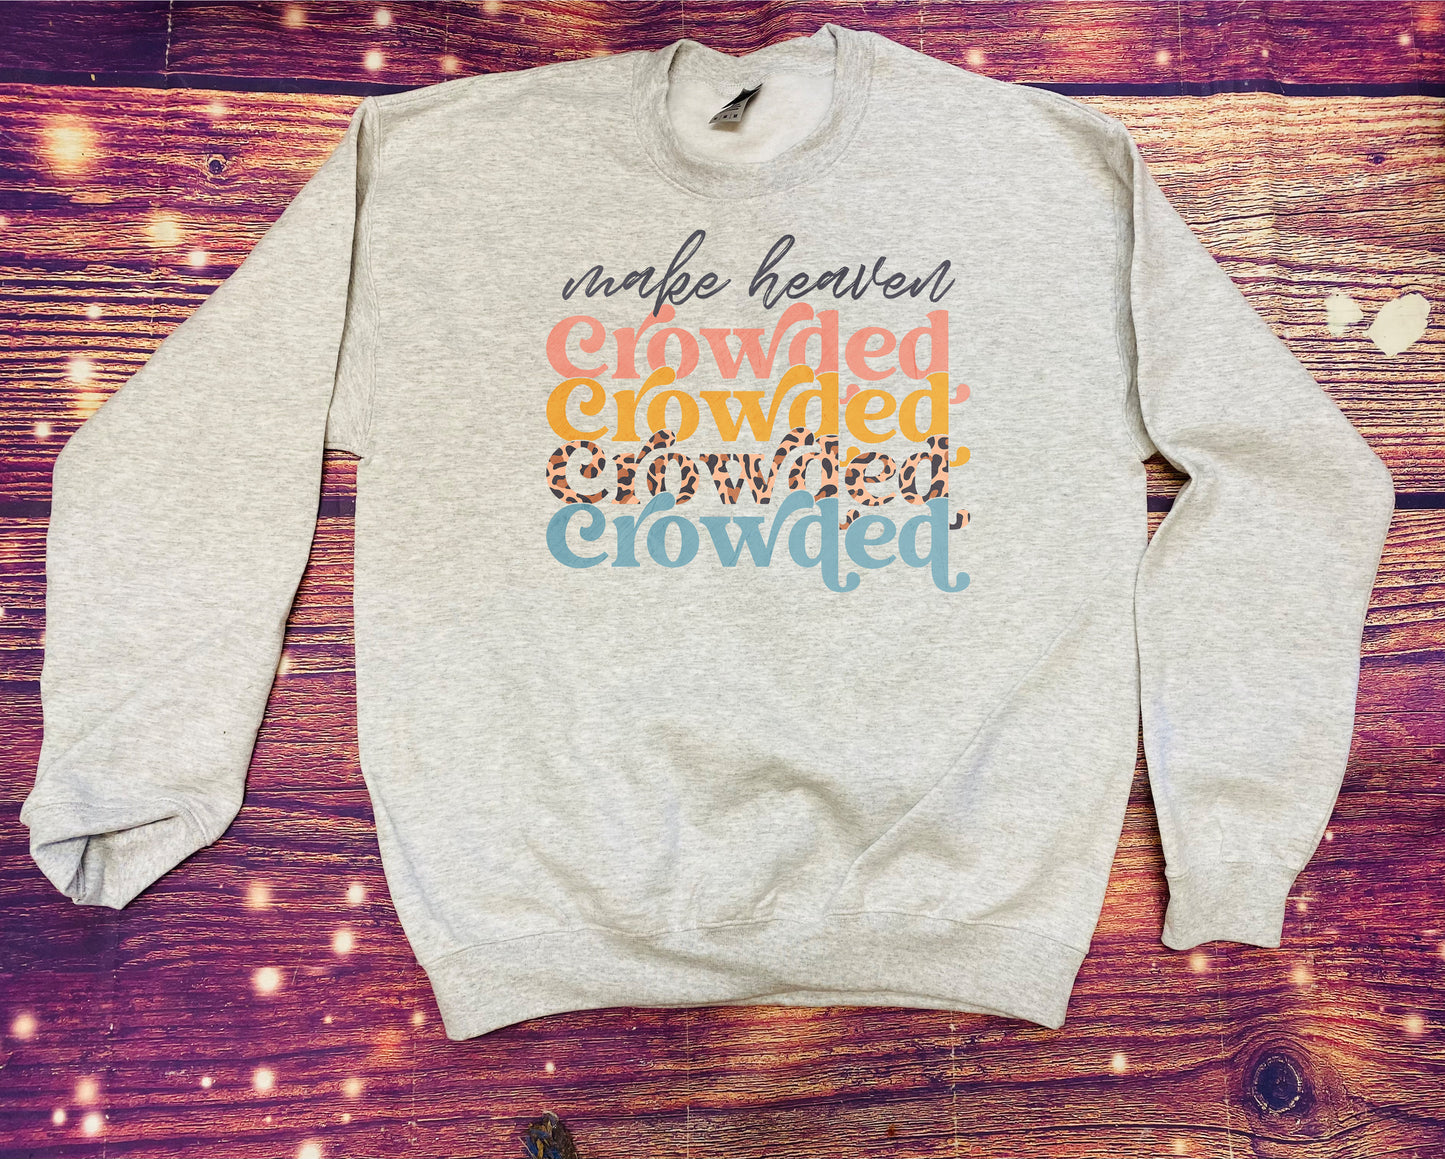 Make Heaven Crowded Sweatshirt